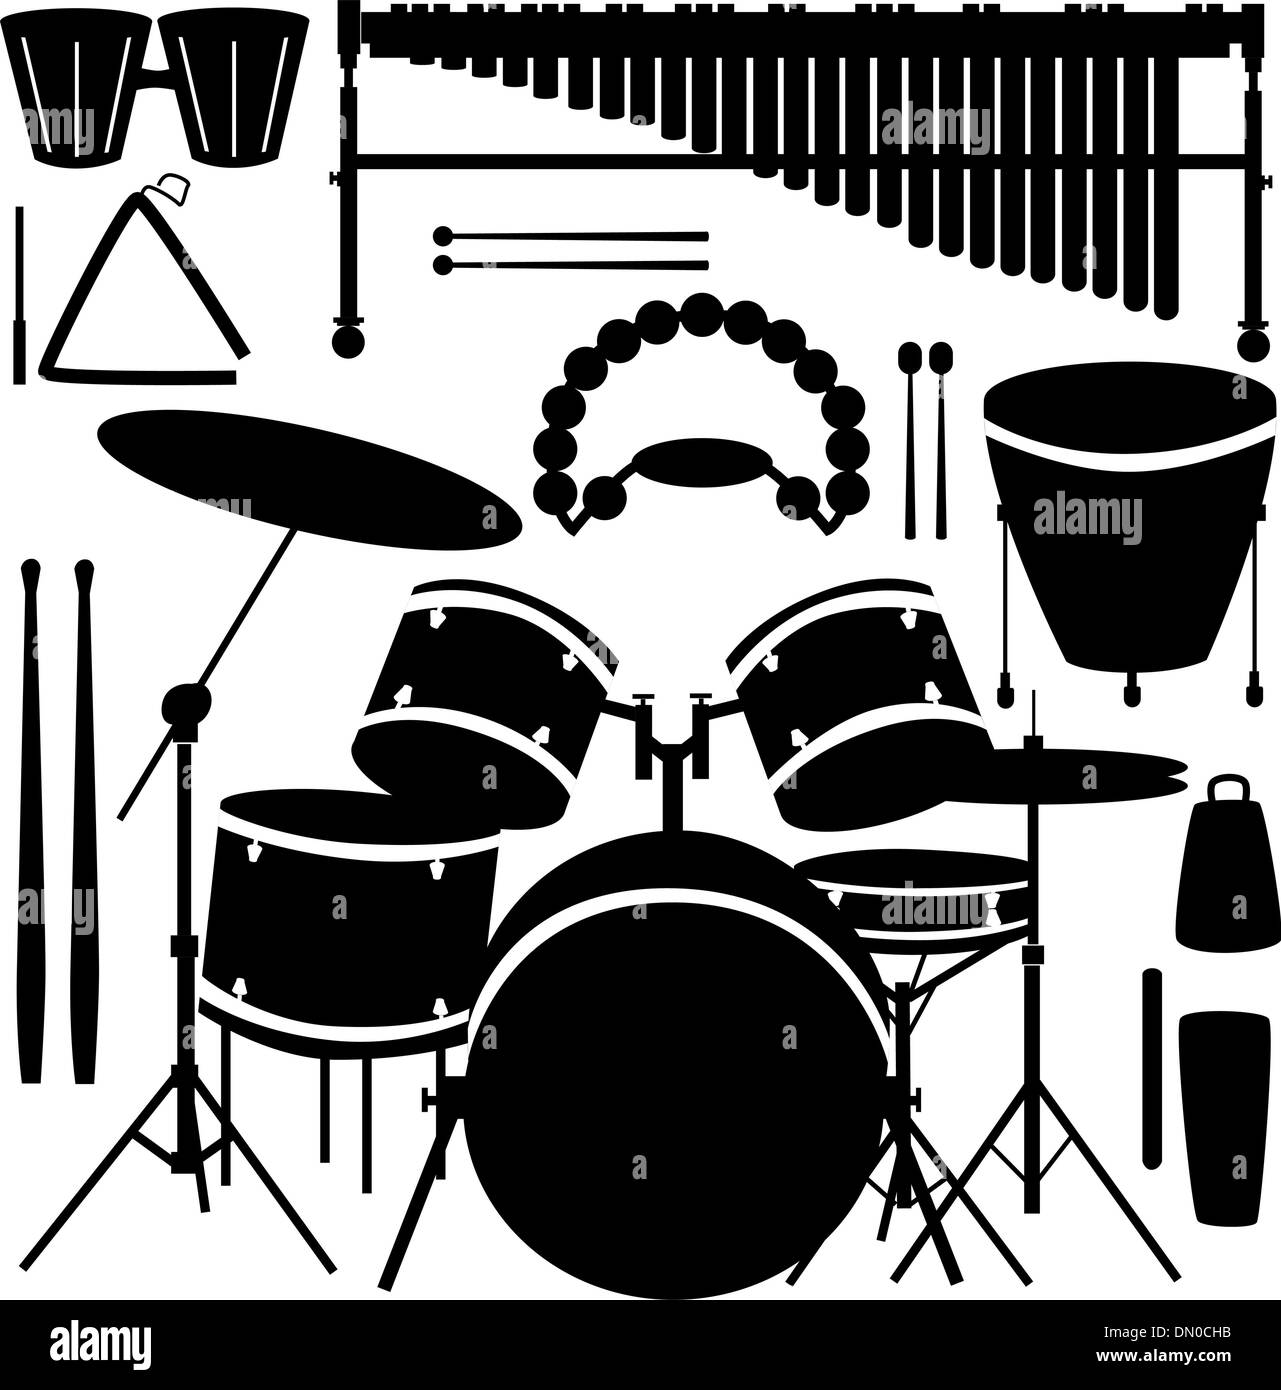 Disfraz biografía Fructífero Instrumentos de percusión silueta vector set Imagen Vector de stock - Alamy